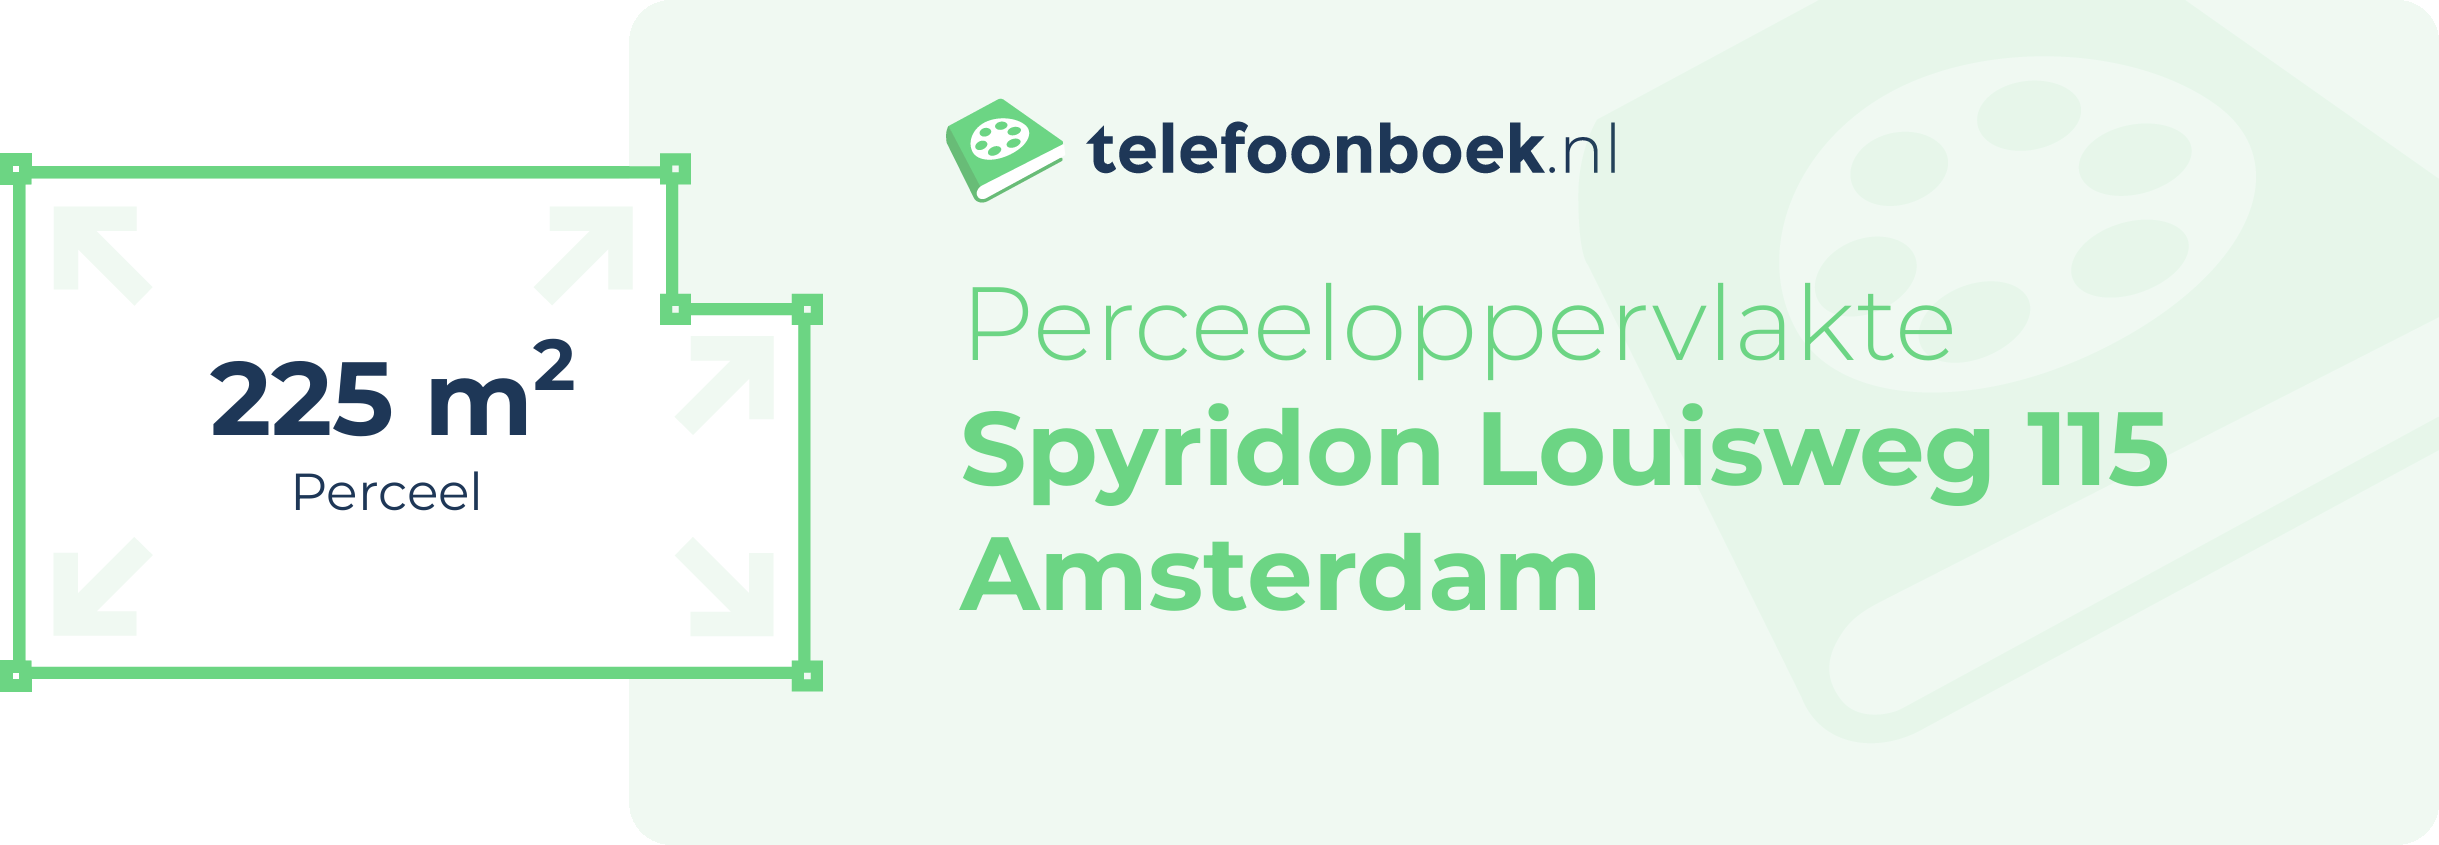 Perceeloppervlakte Spyridon Louisweg 115 Amsterdam